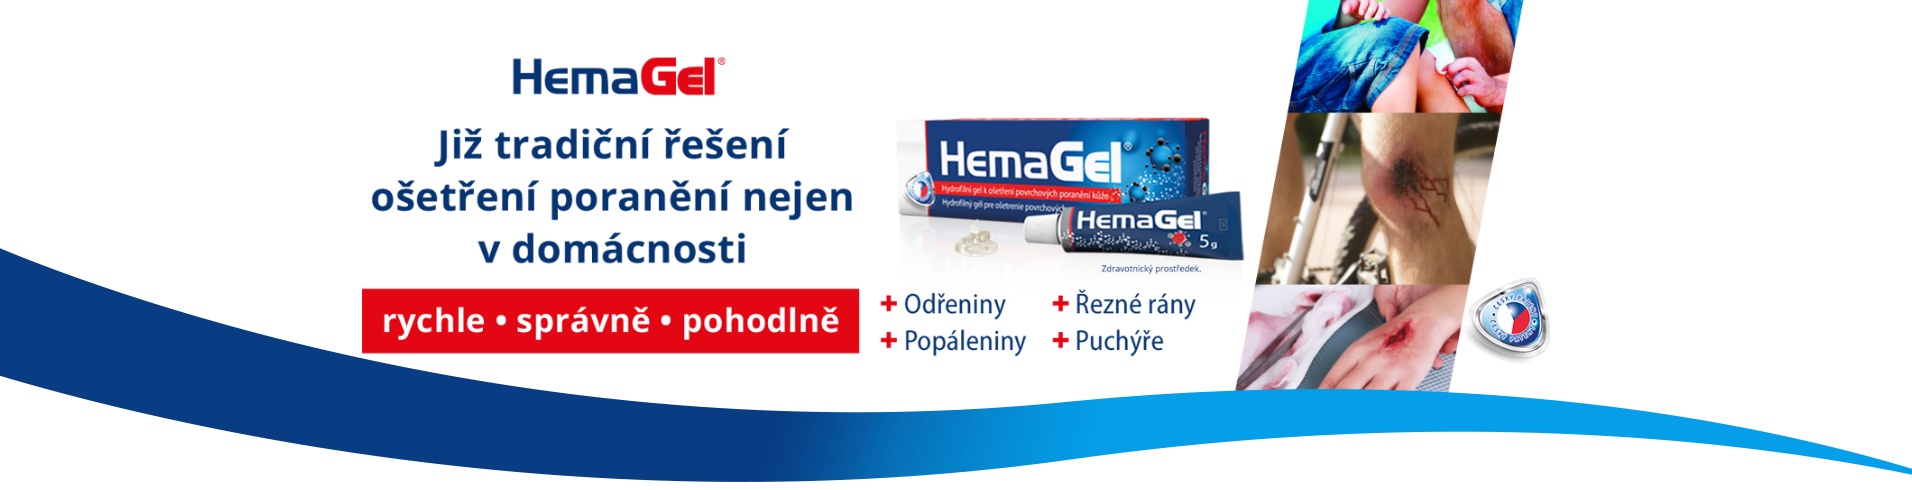 hemagel-tradicni-reseni-b2